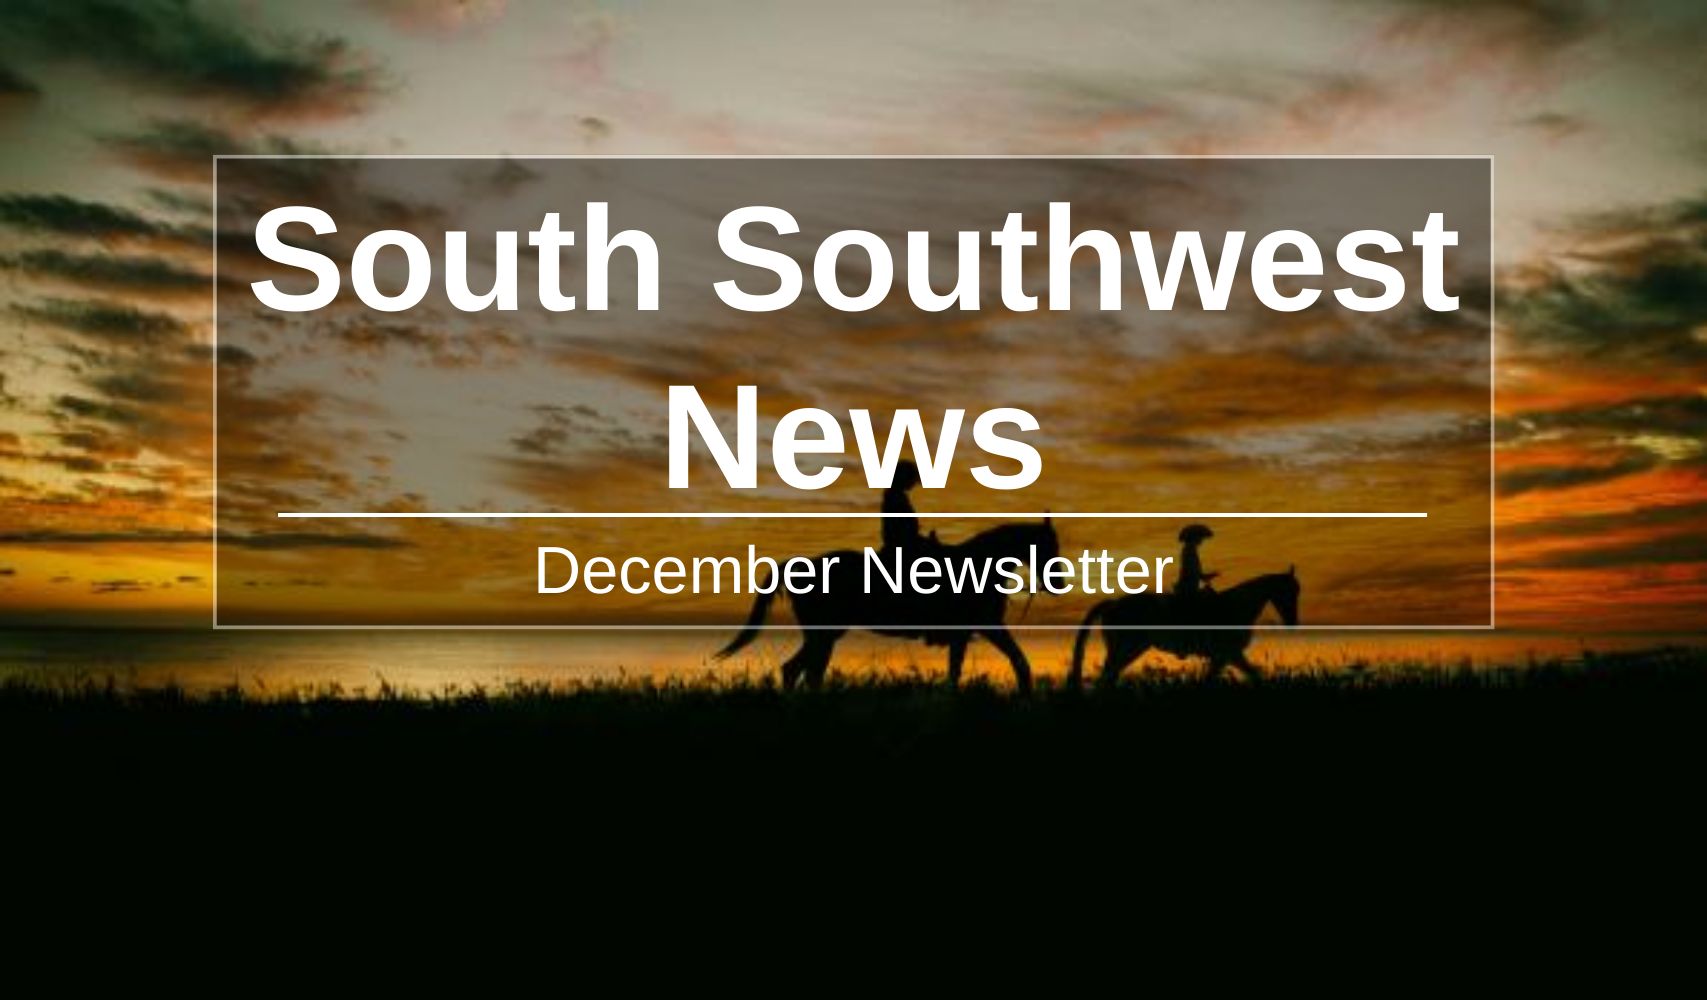 South Southwest News, December Newsletter